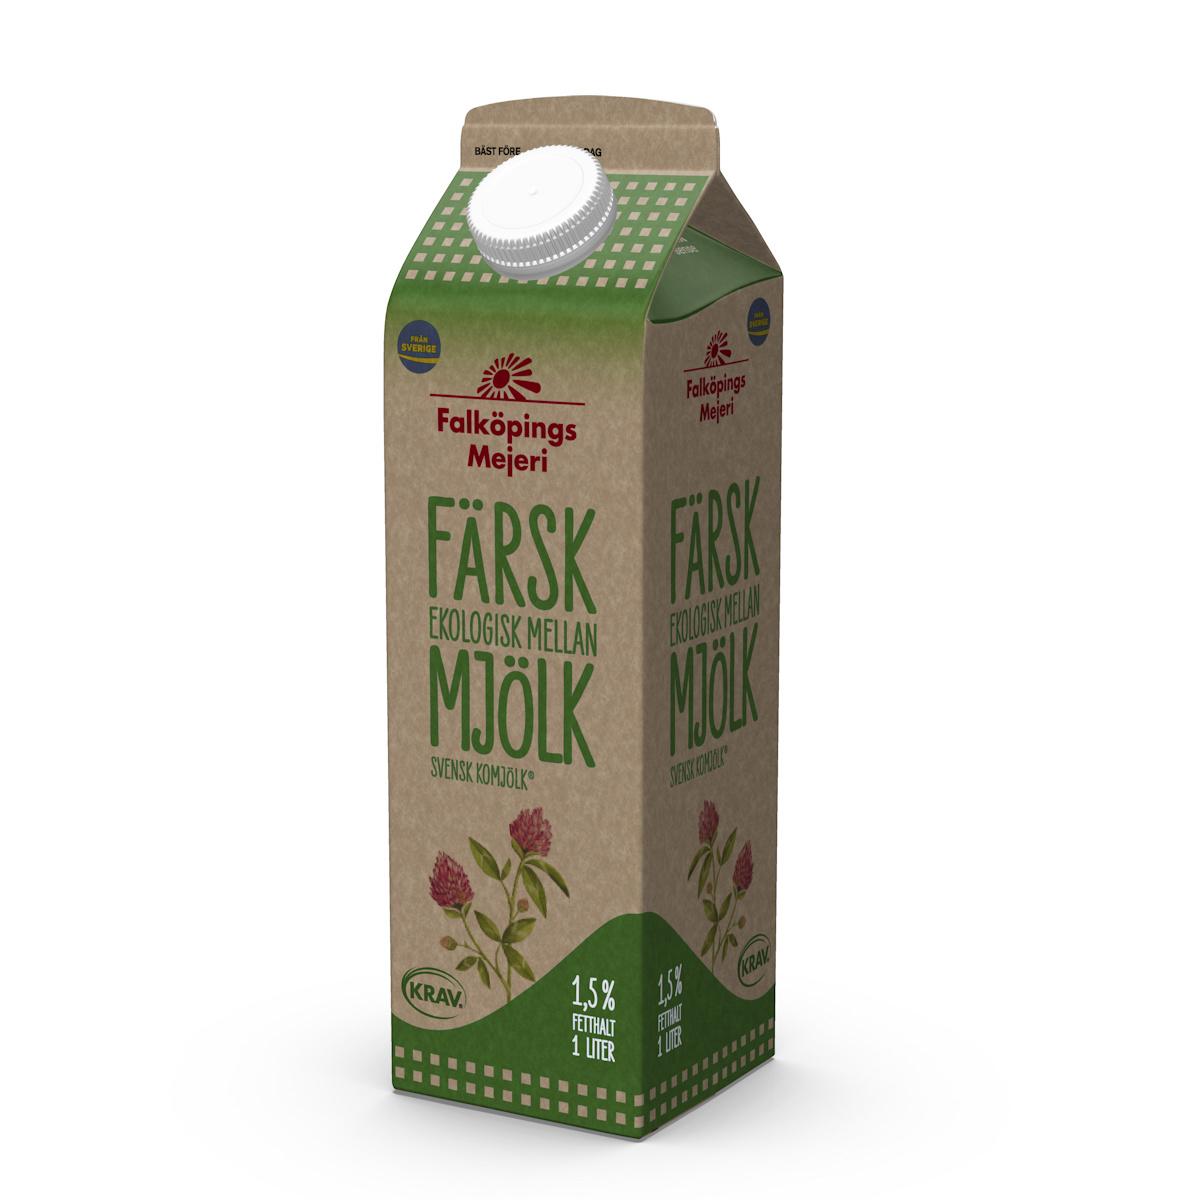 Falköpings Mejeri's Intermediate milk, 1,5% '